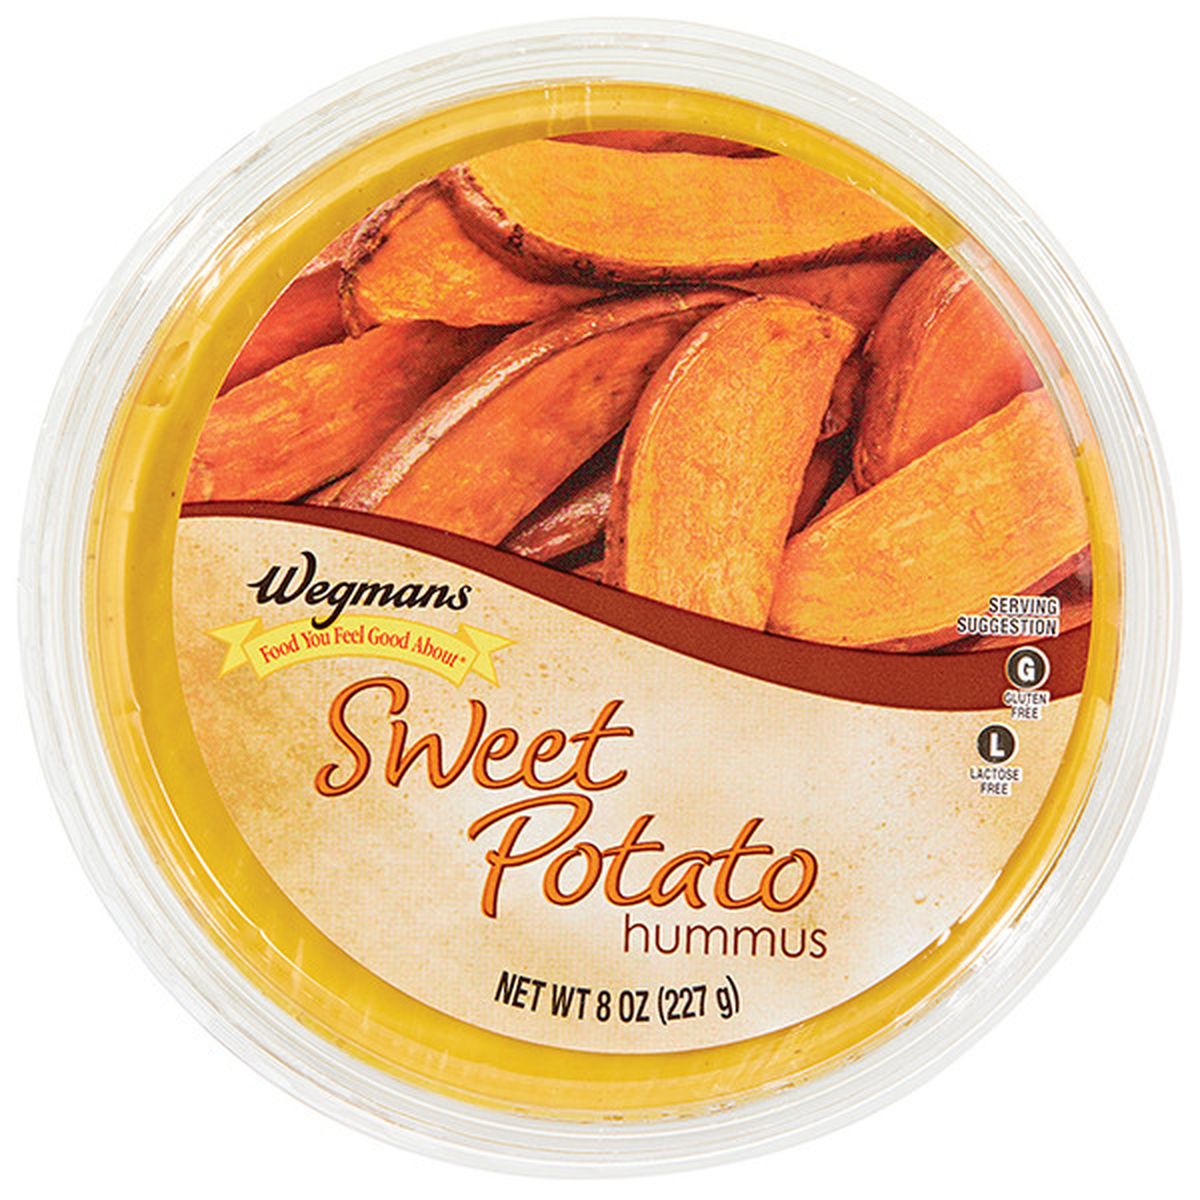 Calories in Wegmans Sweet Potato Hummus